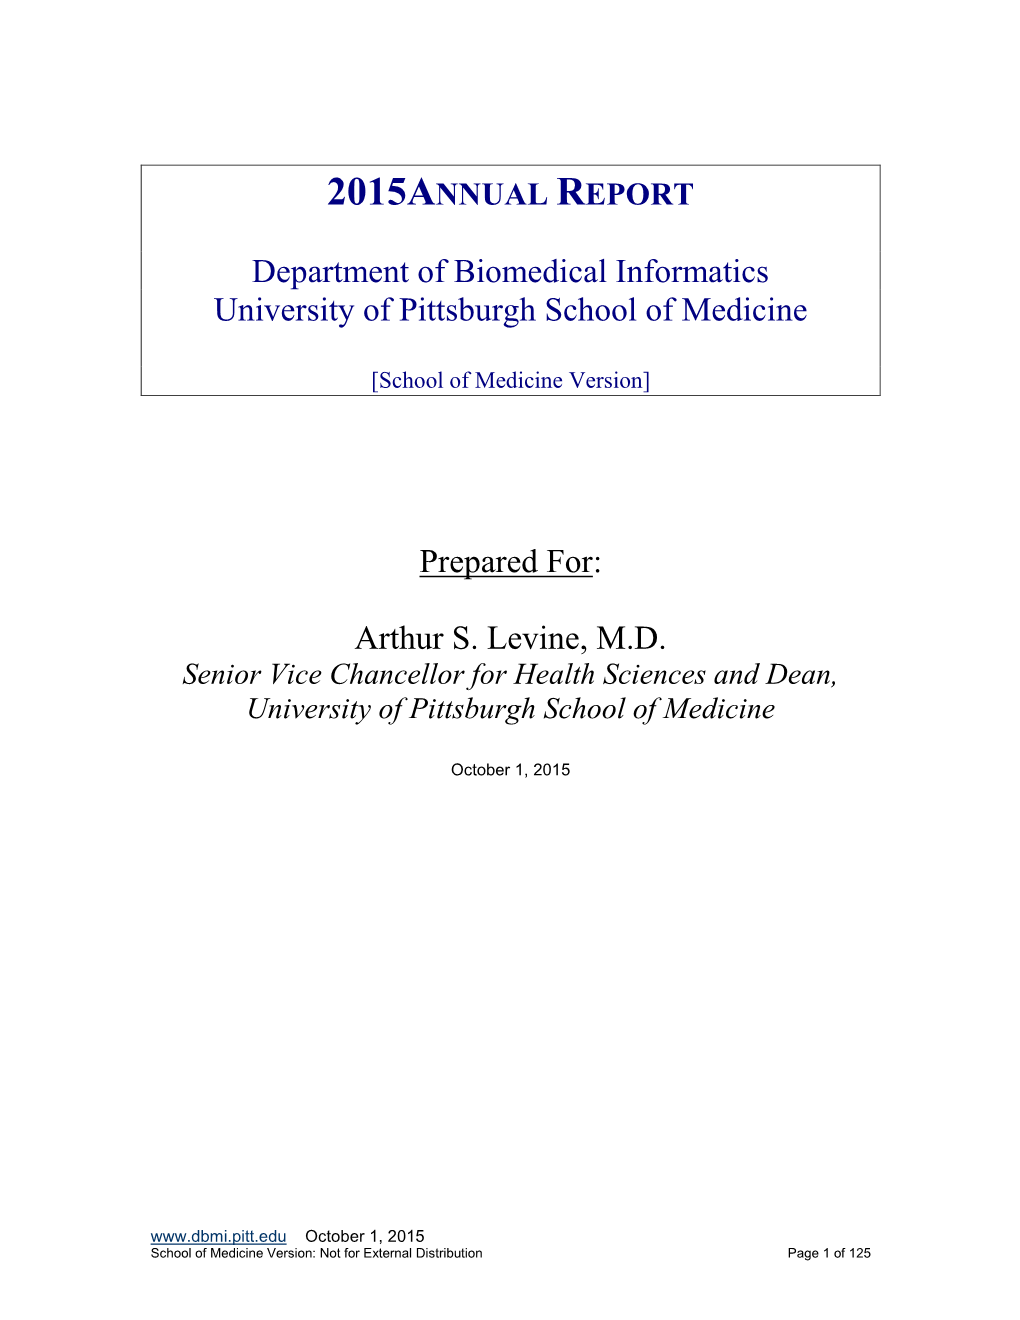 Pitt DBMI Annual Report 2015